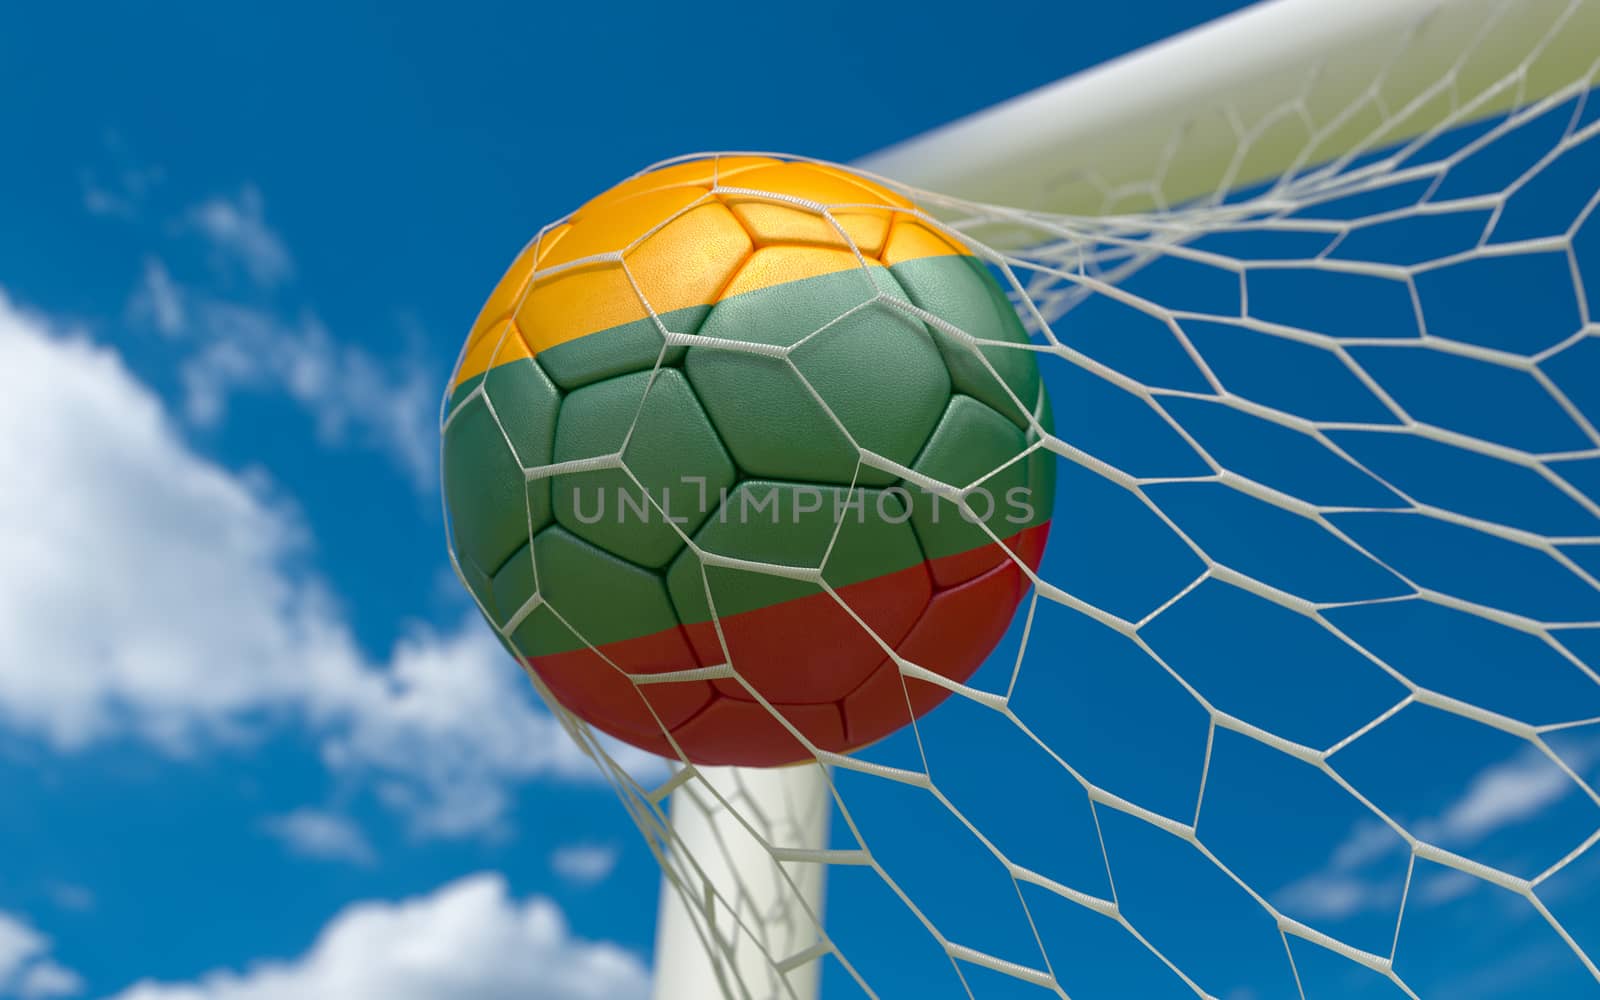 Flag of Lithuania and soccer ball in goal net by Barbraford